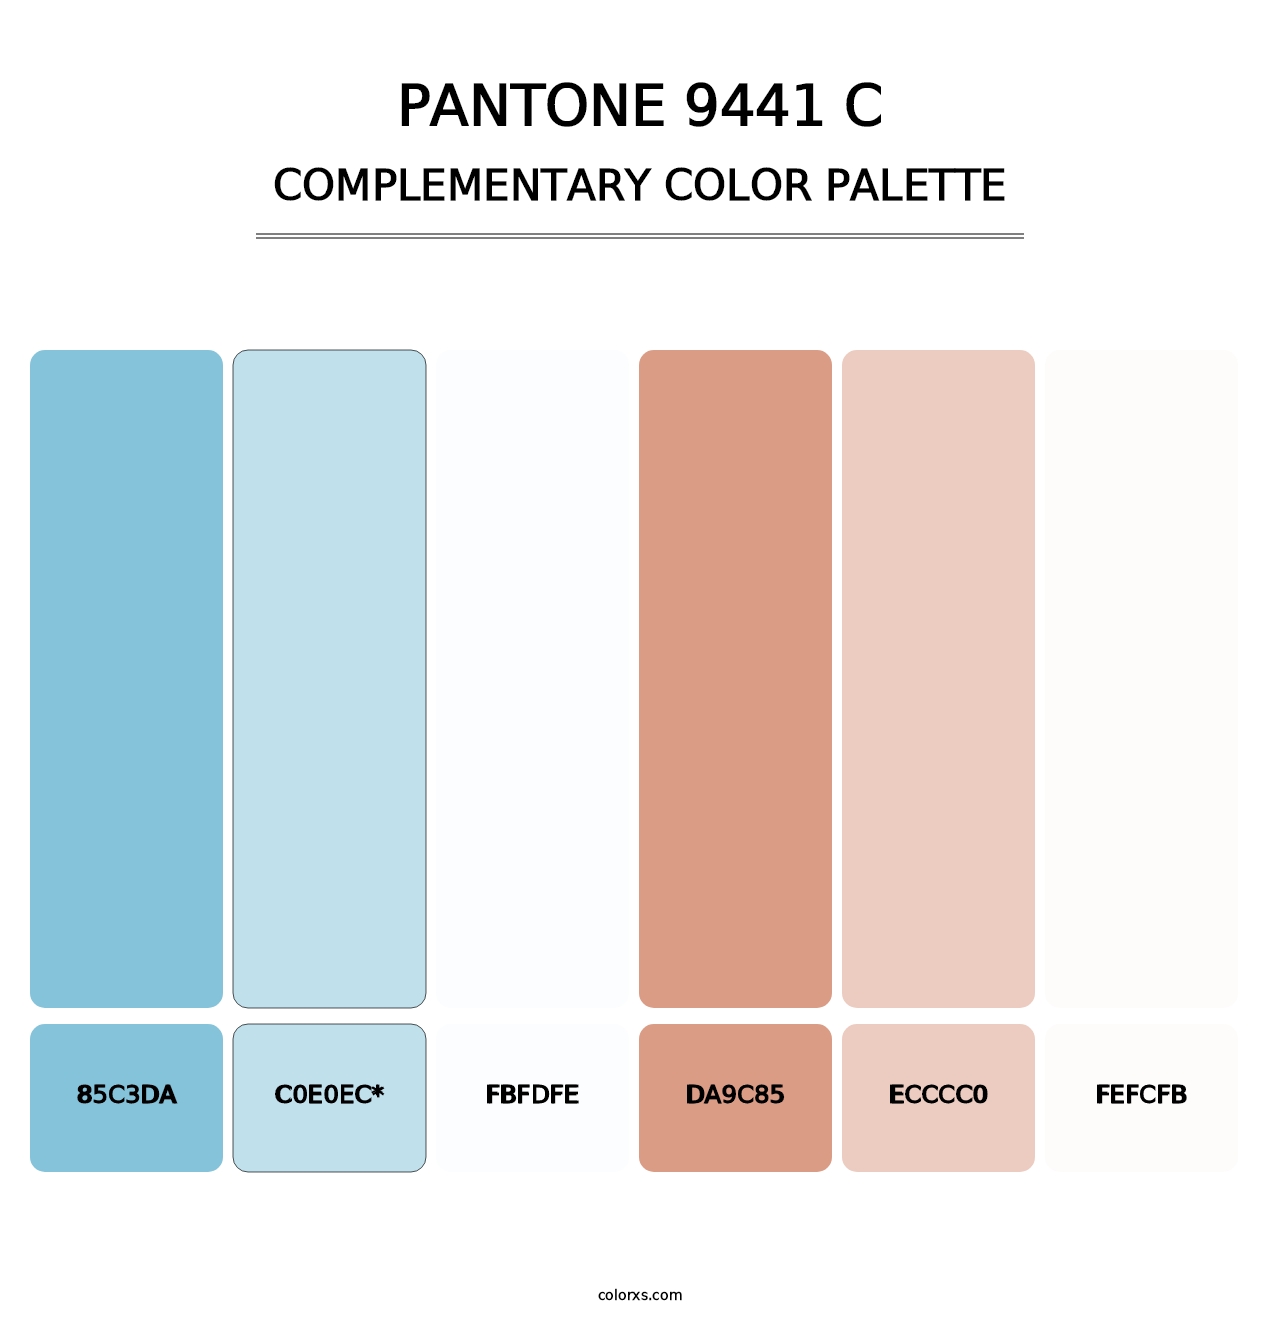 PANTONE 9441 C - Complementary Color Palette